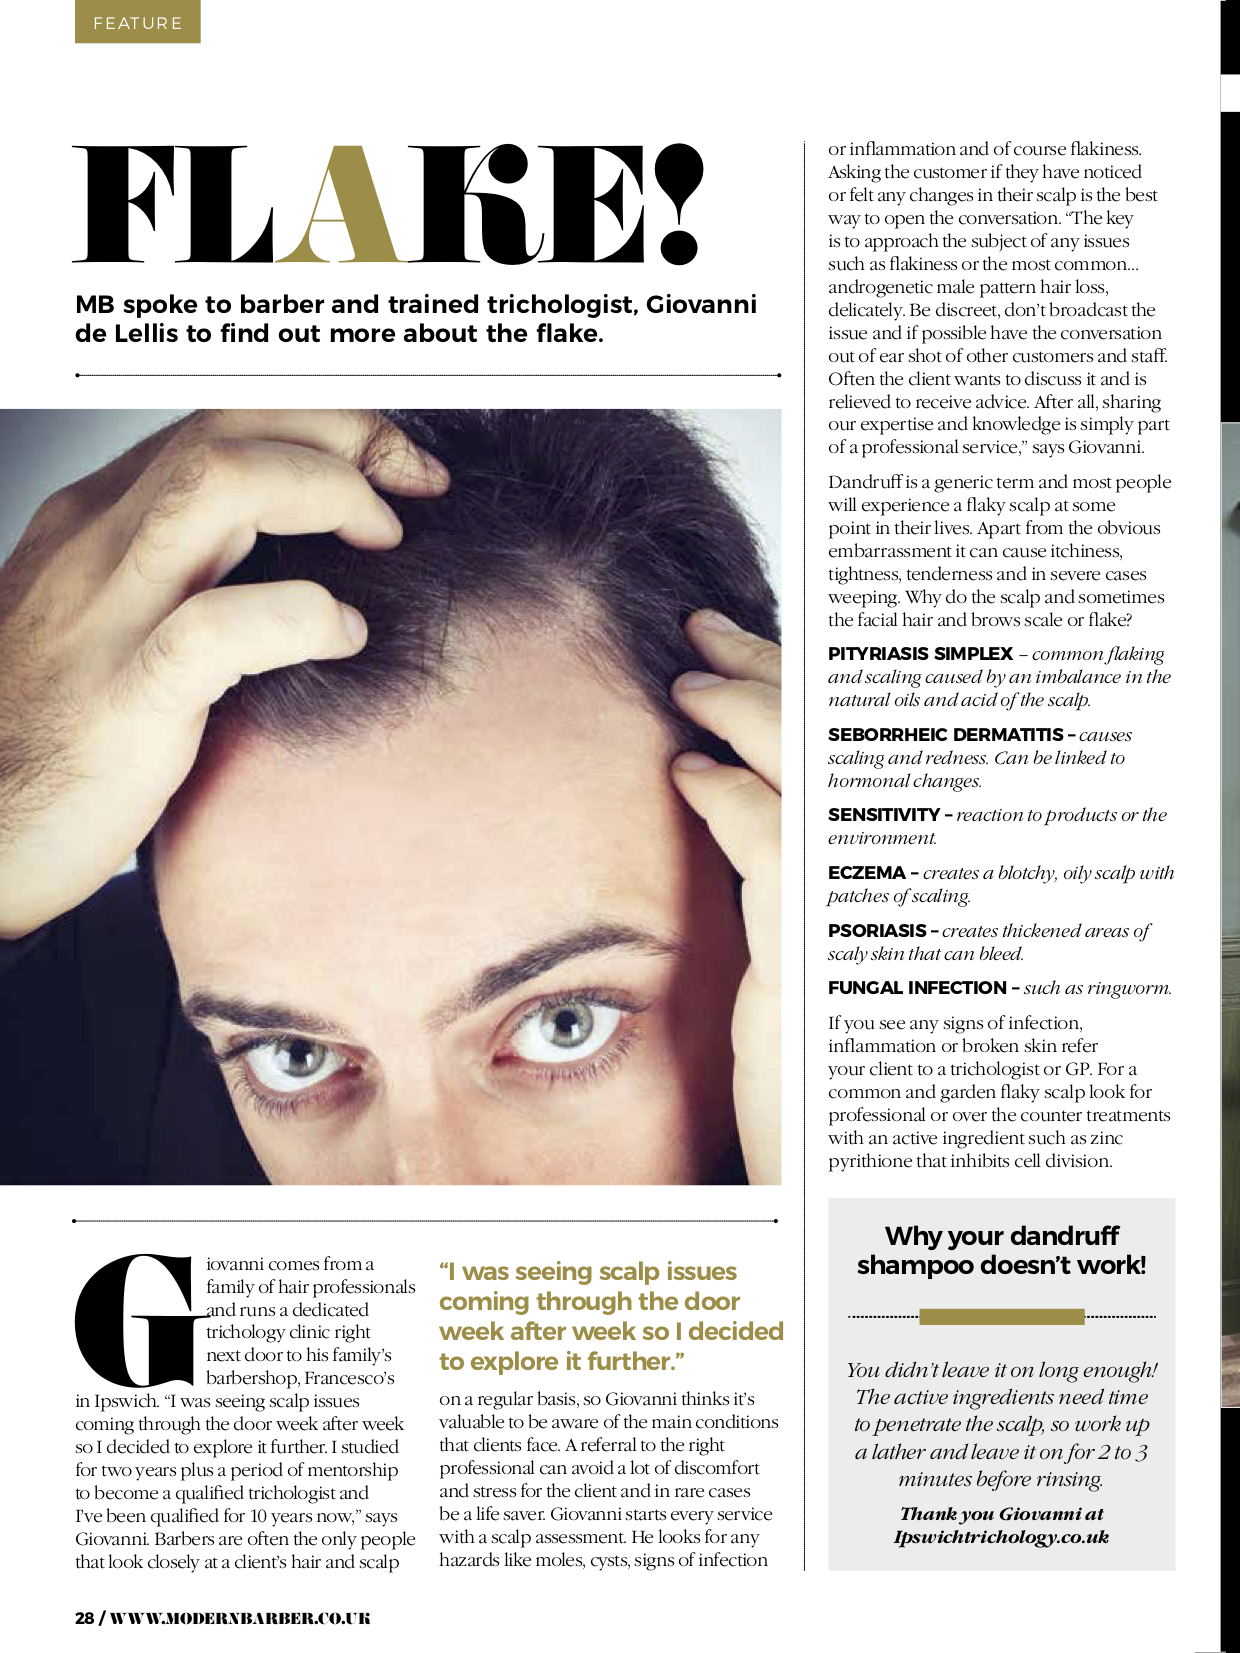 FLAKE! Modern Barber Magazine article by Giovanni De Lellis